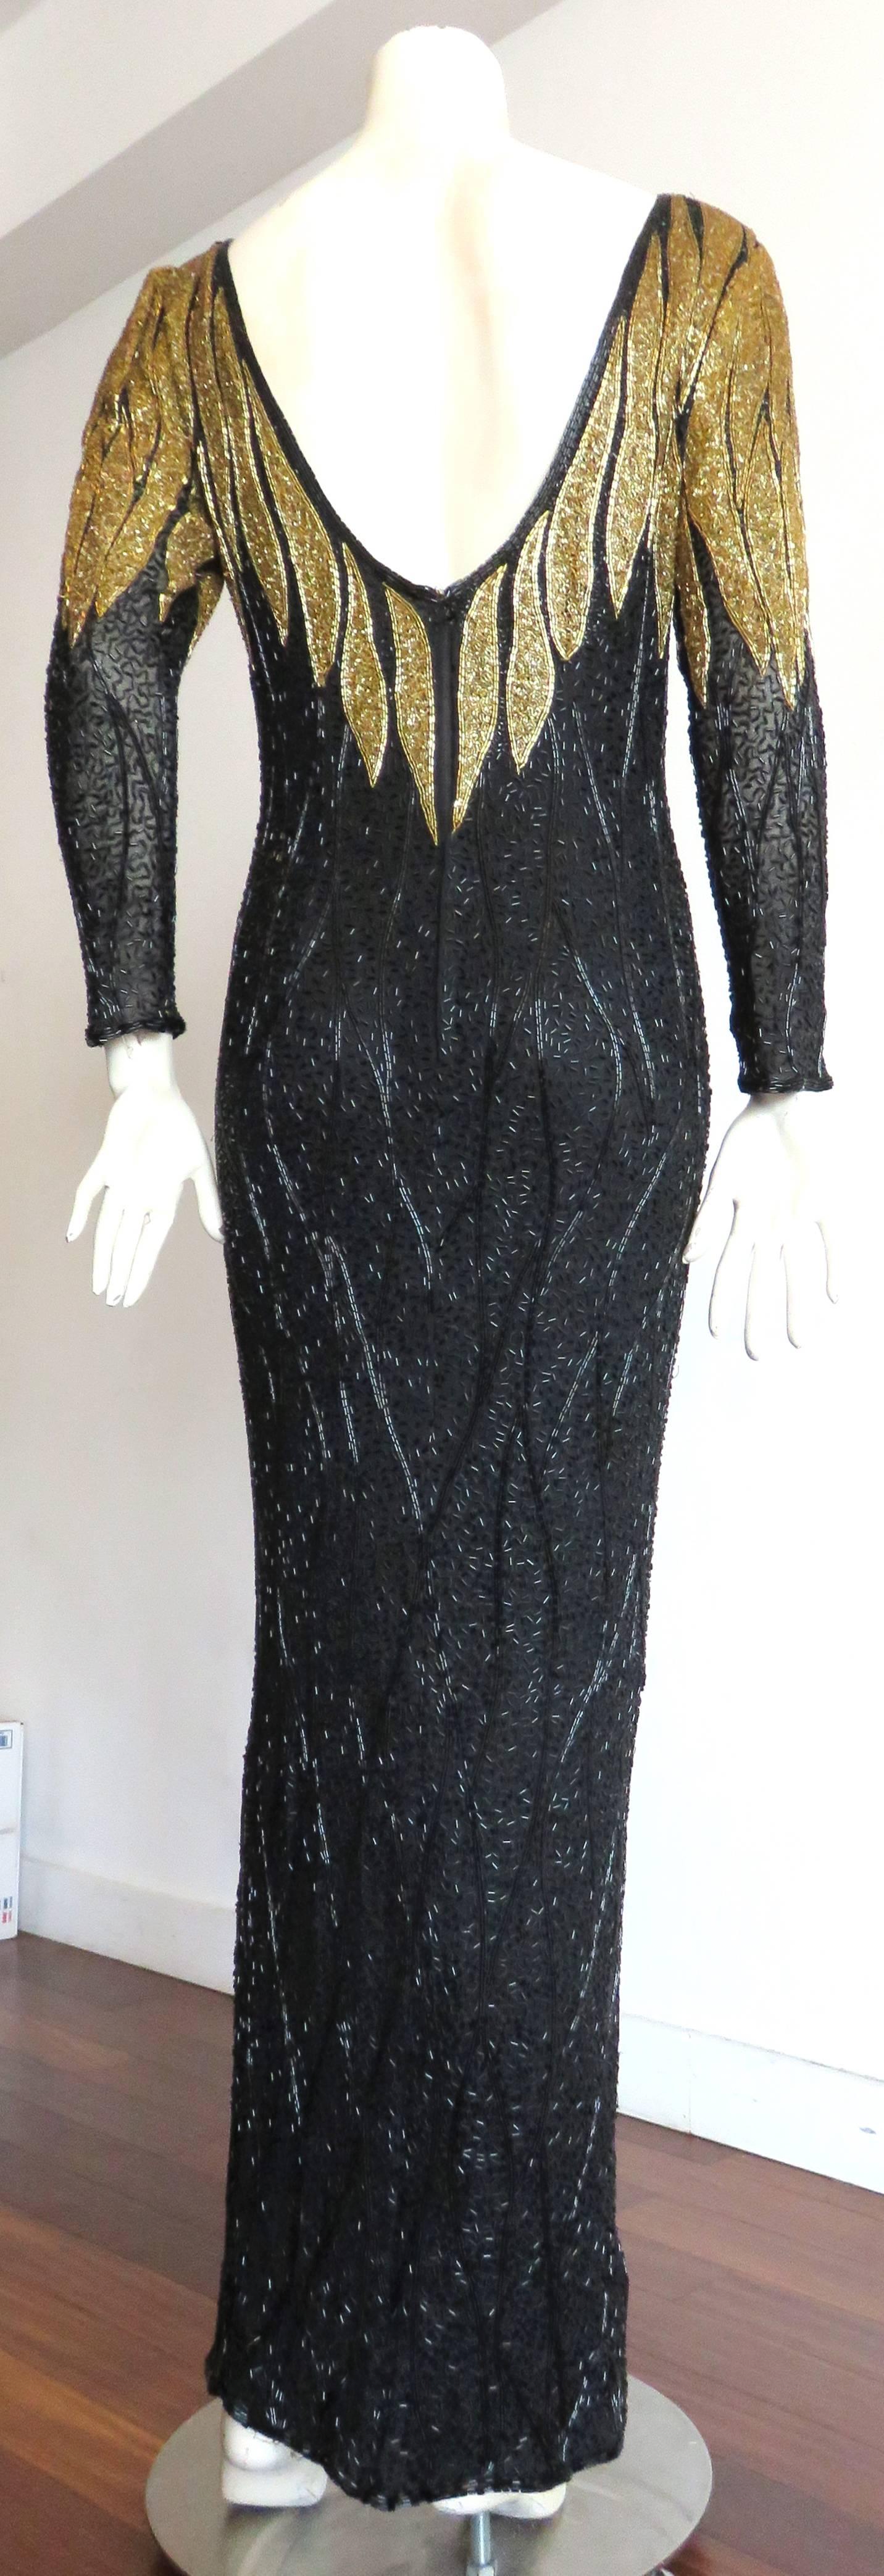 Black 1980's BOB MACKIE Hand-beaded Gold-flame evening dress